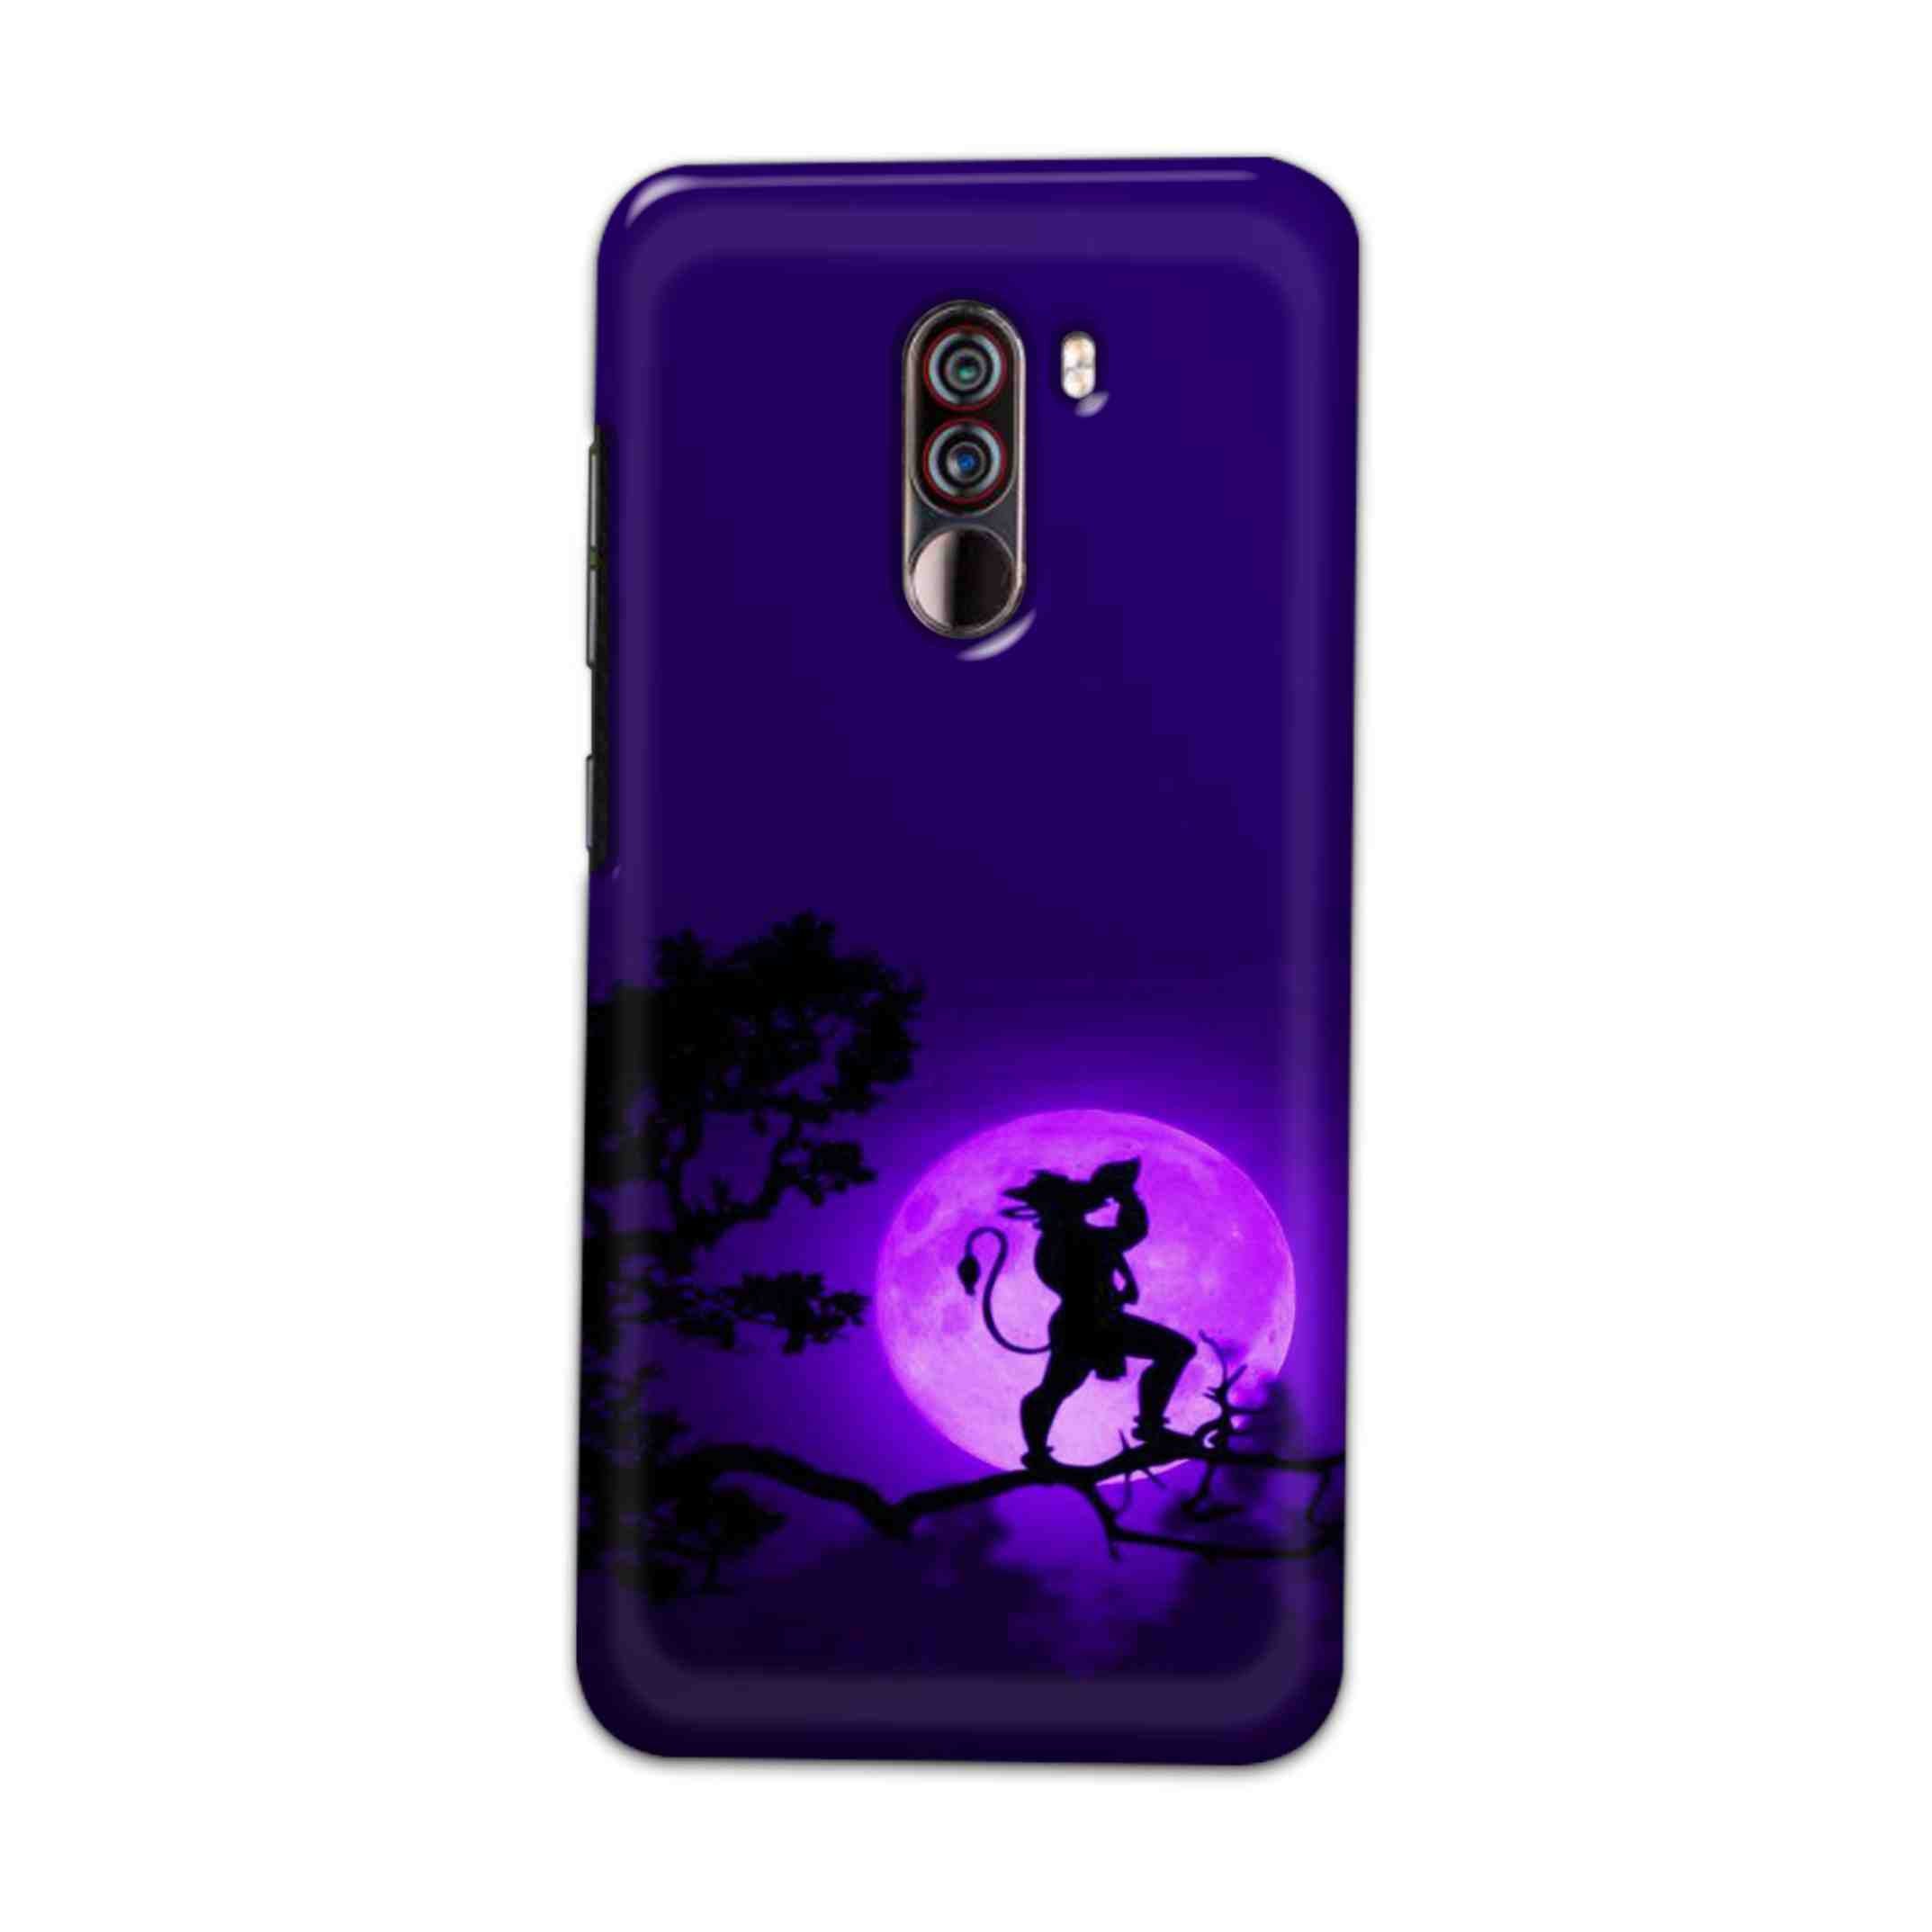 Buy Hanuman Hard Back Mobile Phone Case Cover For Xiaomi Pocophone F1 Online